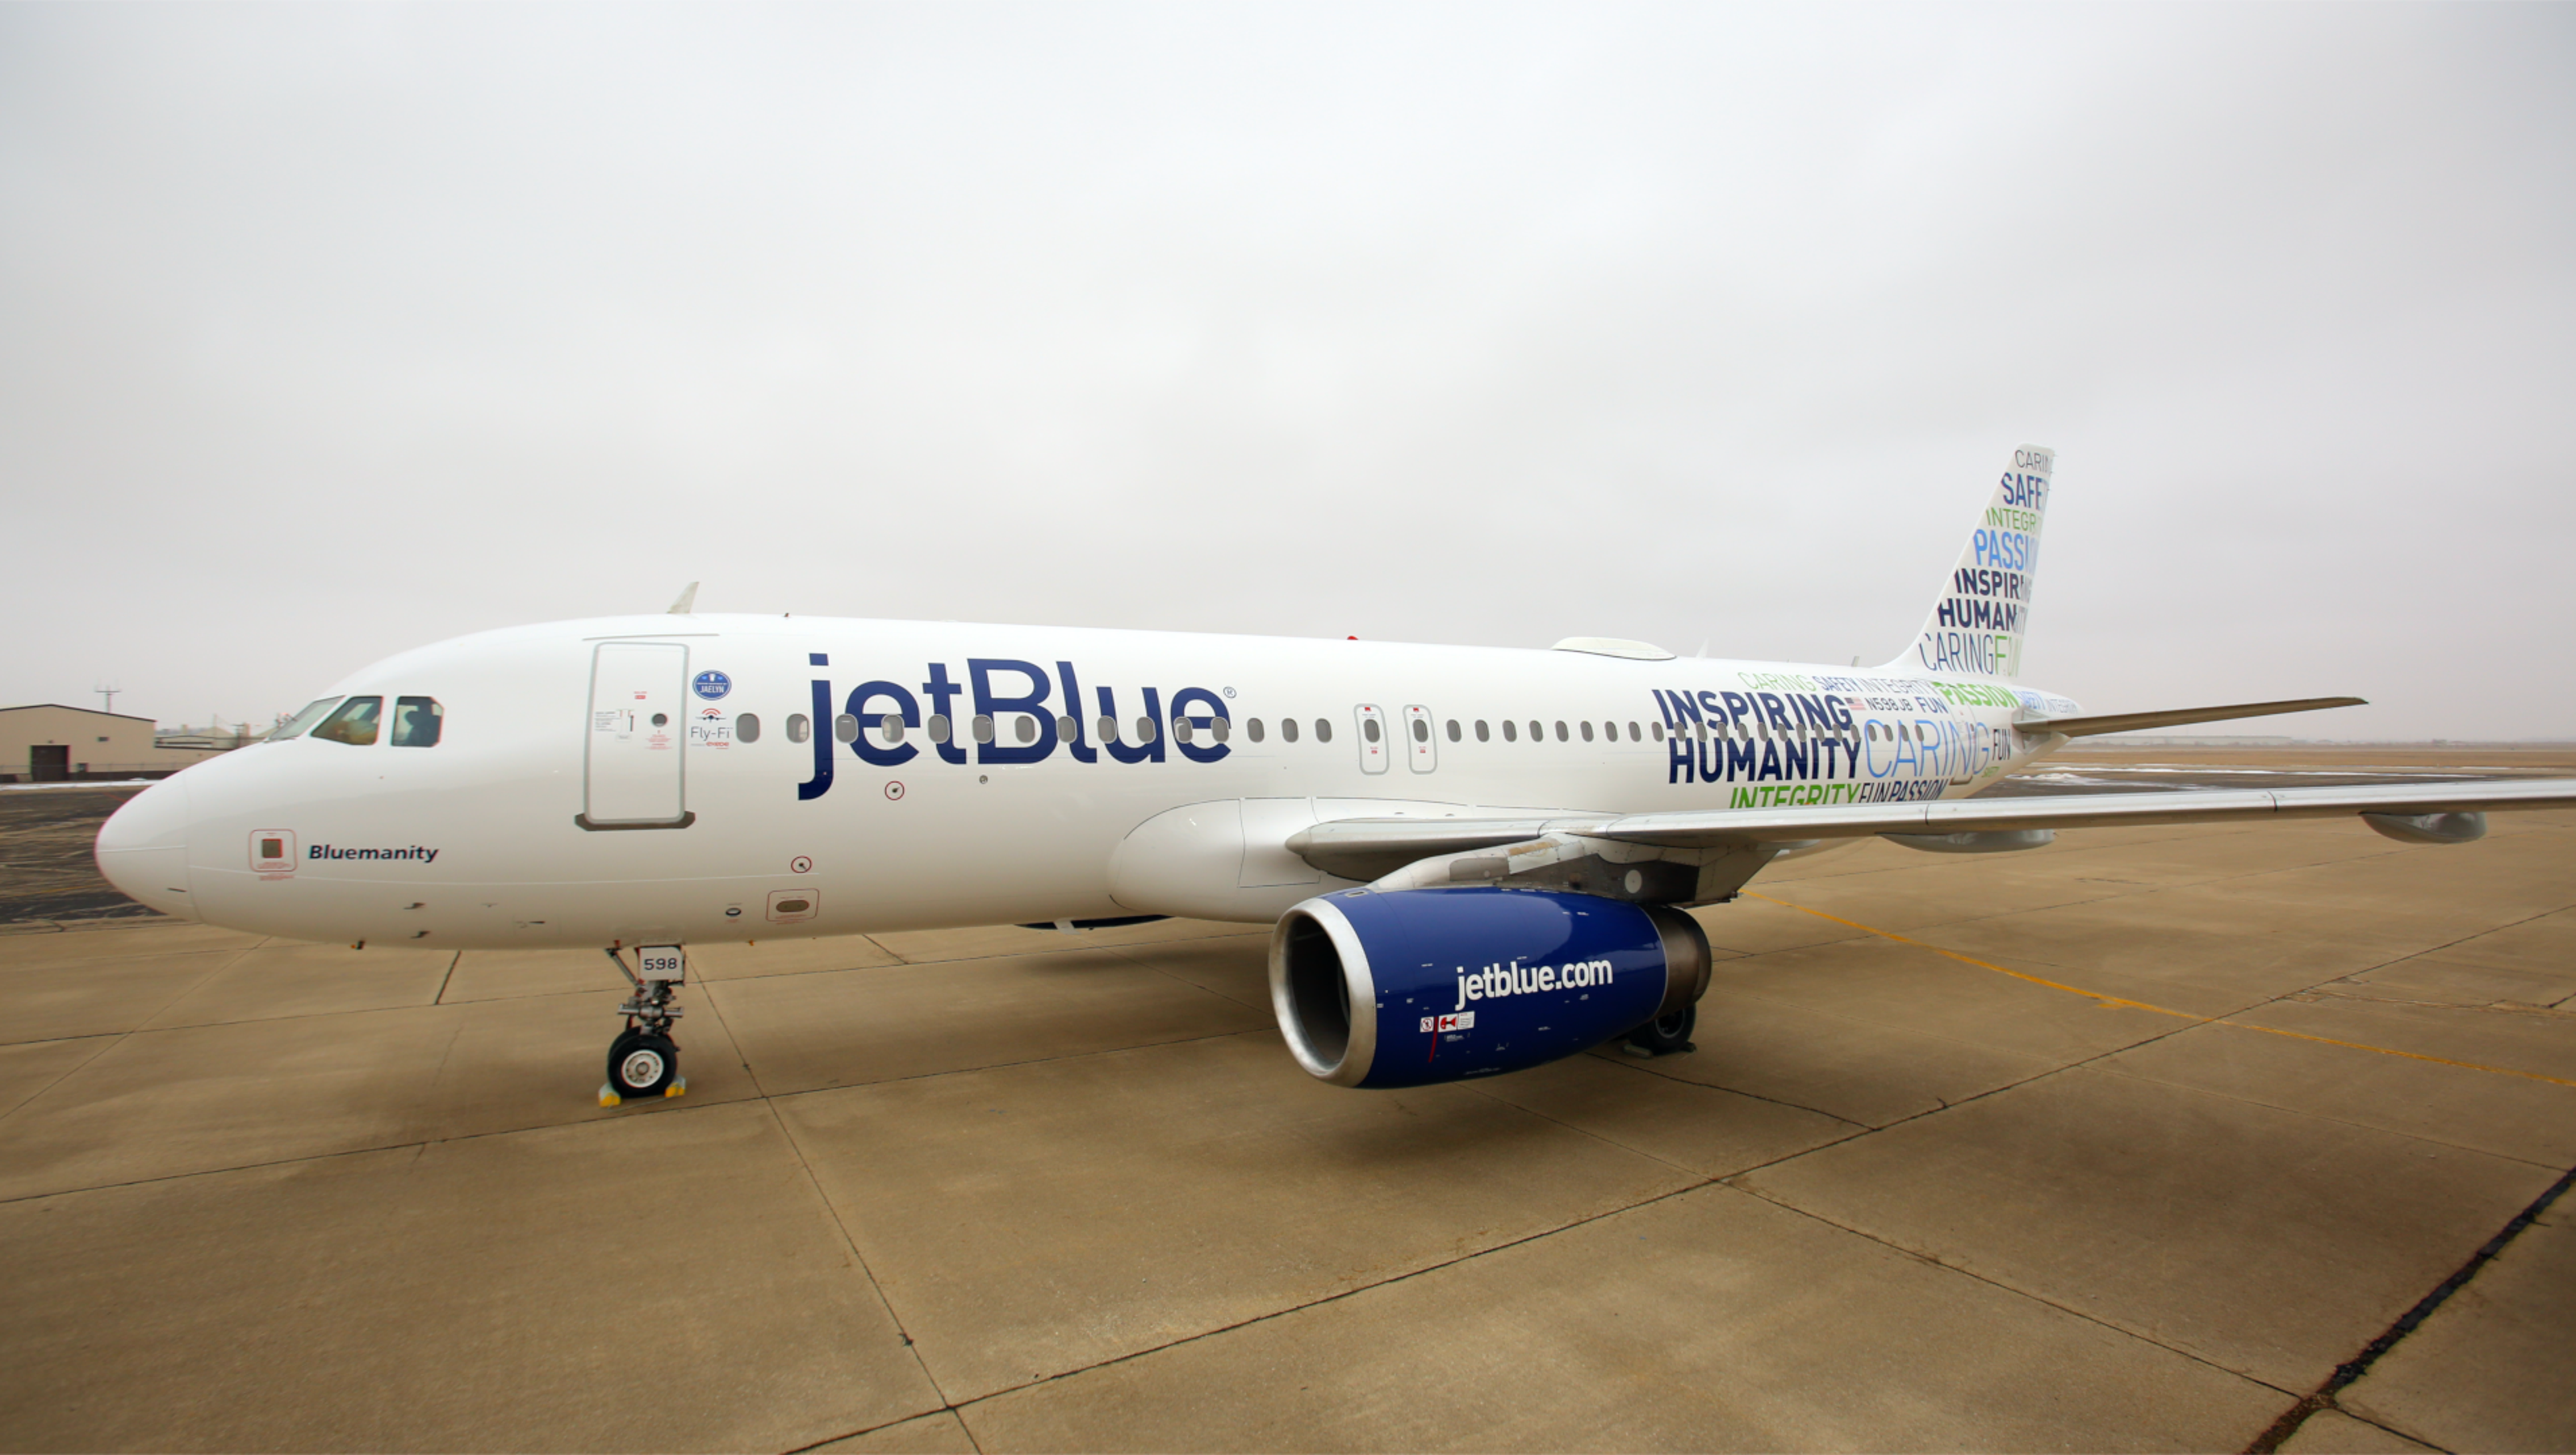 JetBlue unveils new 'Bluemanity' livery